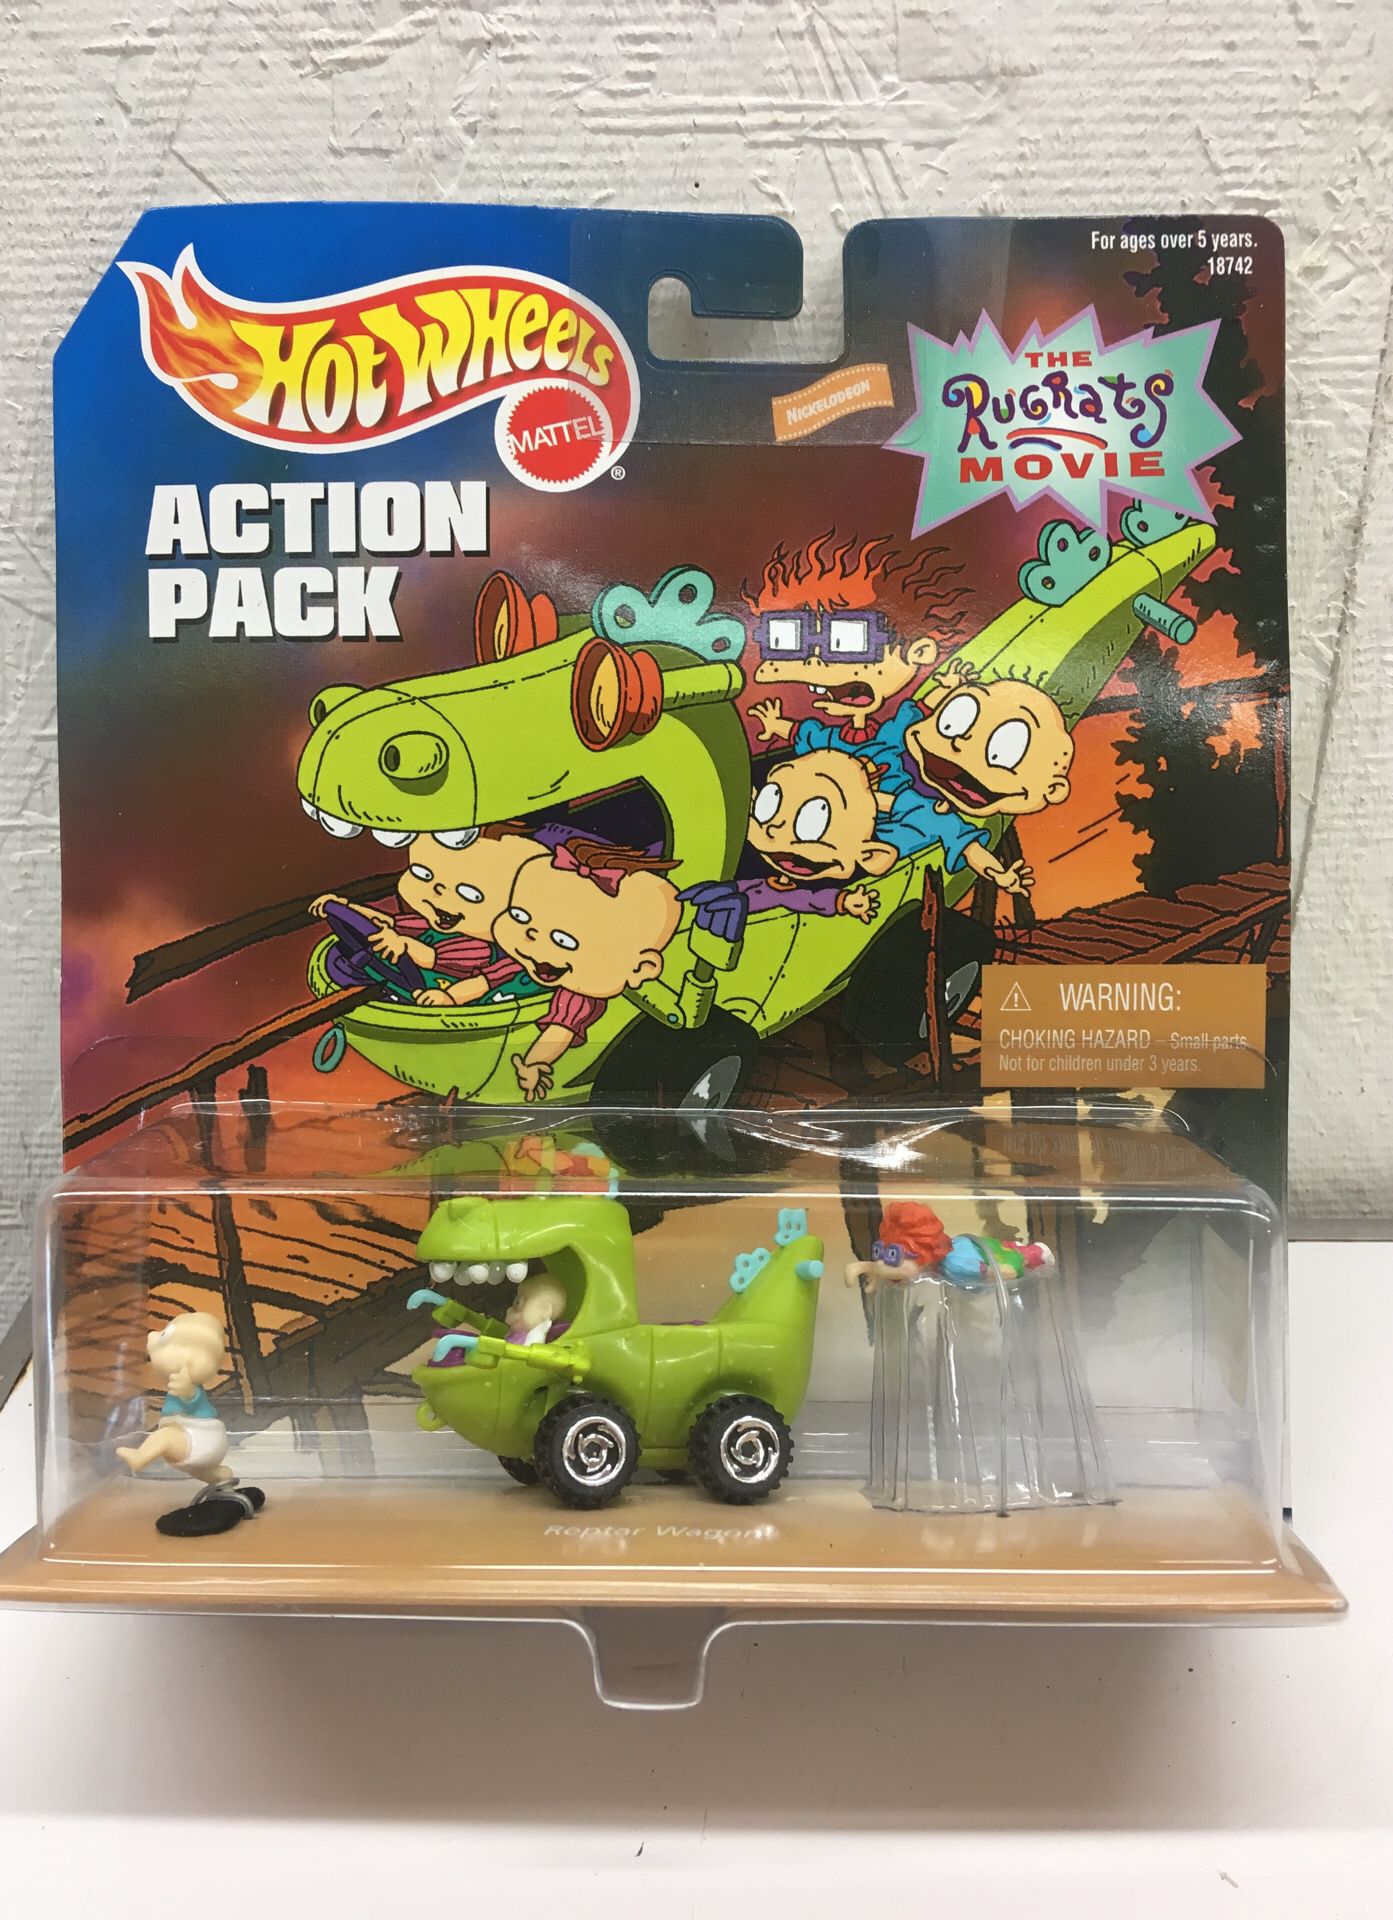 Hot Wheels Action Pack Rugrats Movie Set